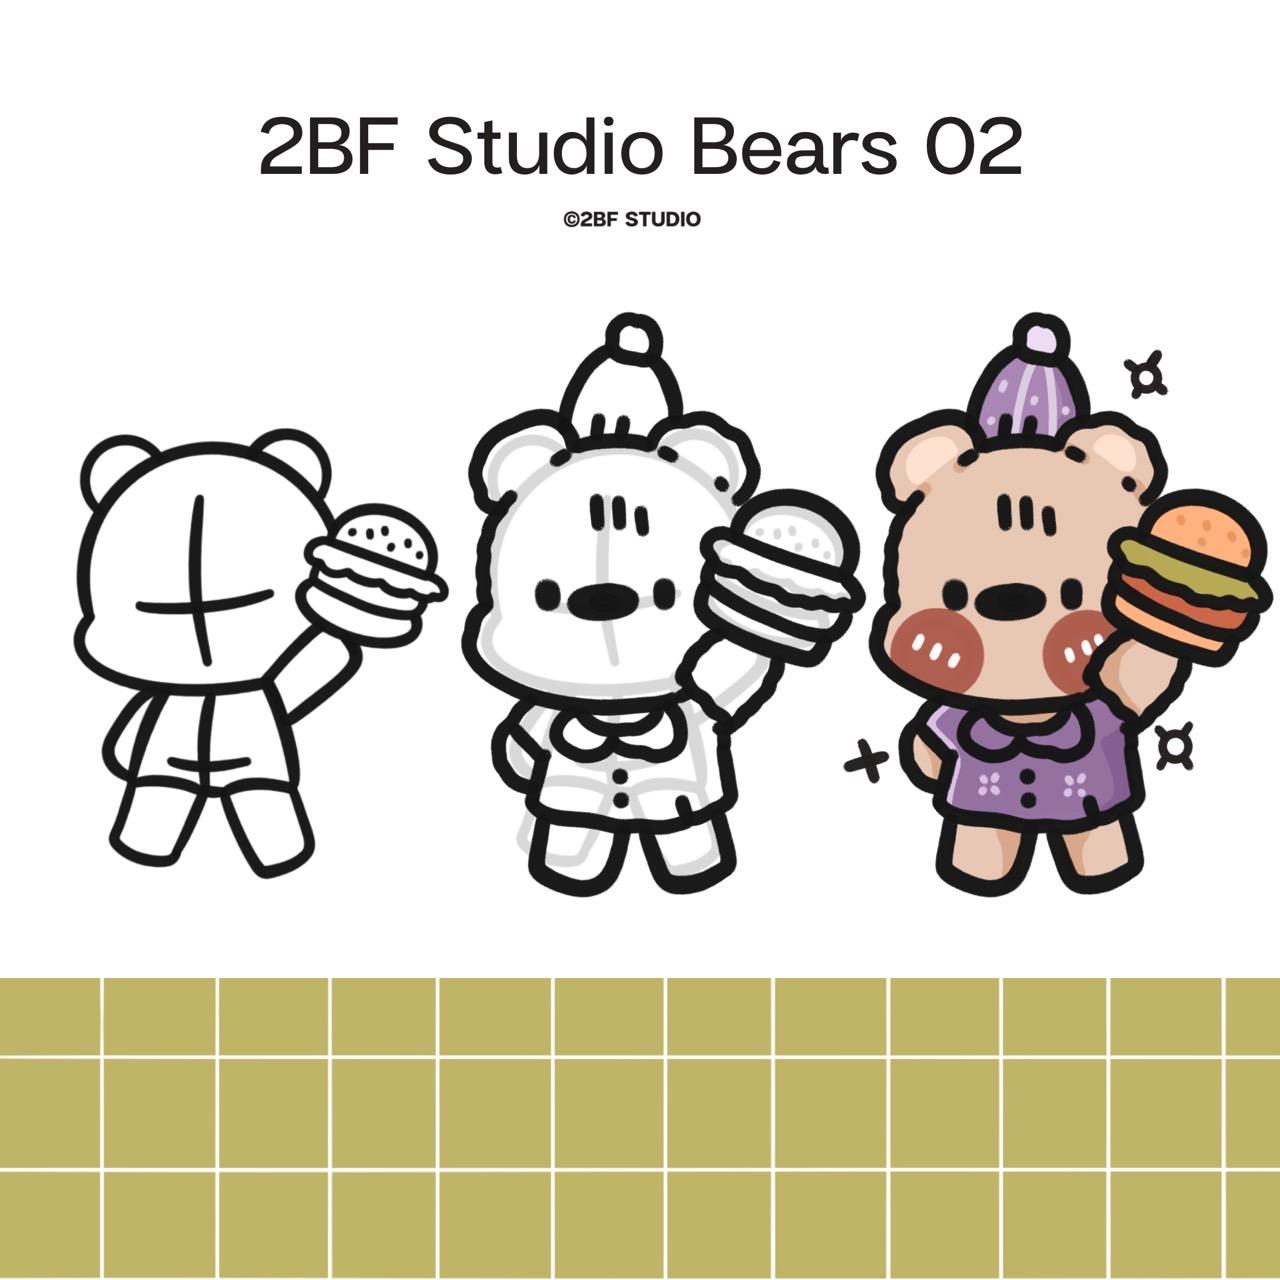 2BF STUDIO Bears 02